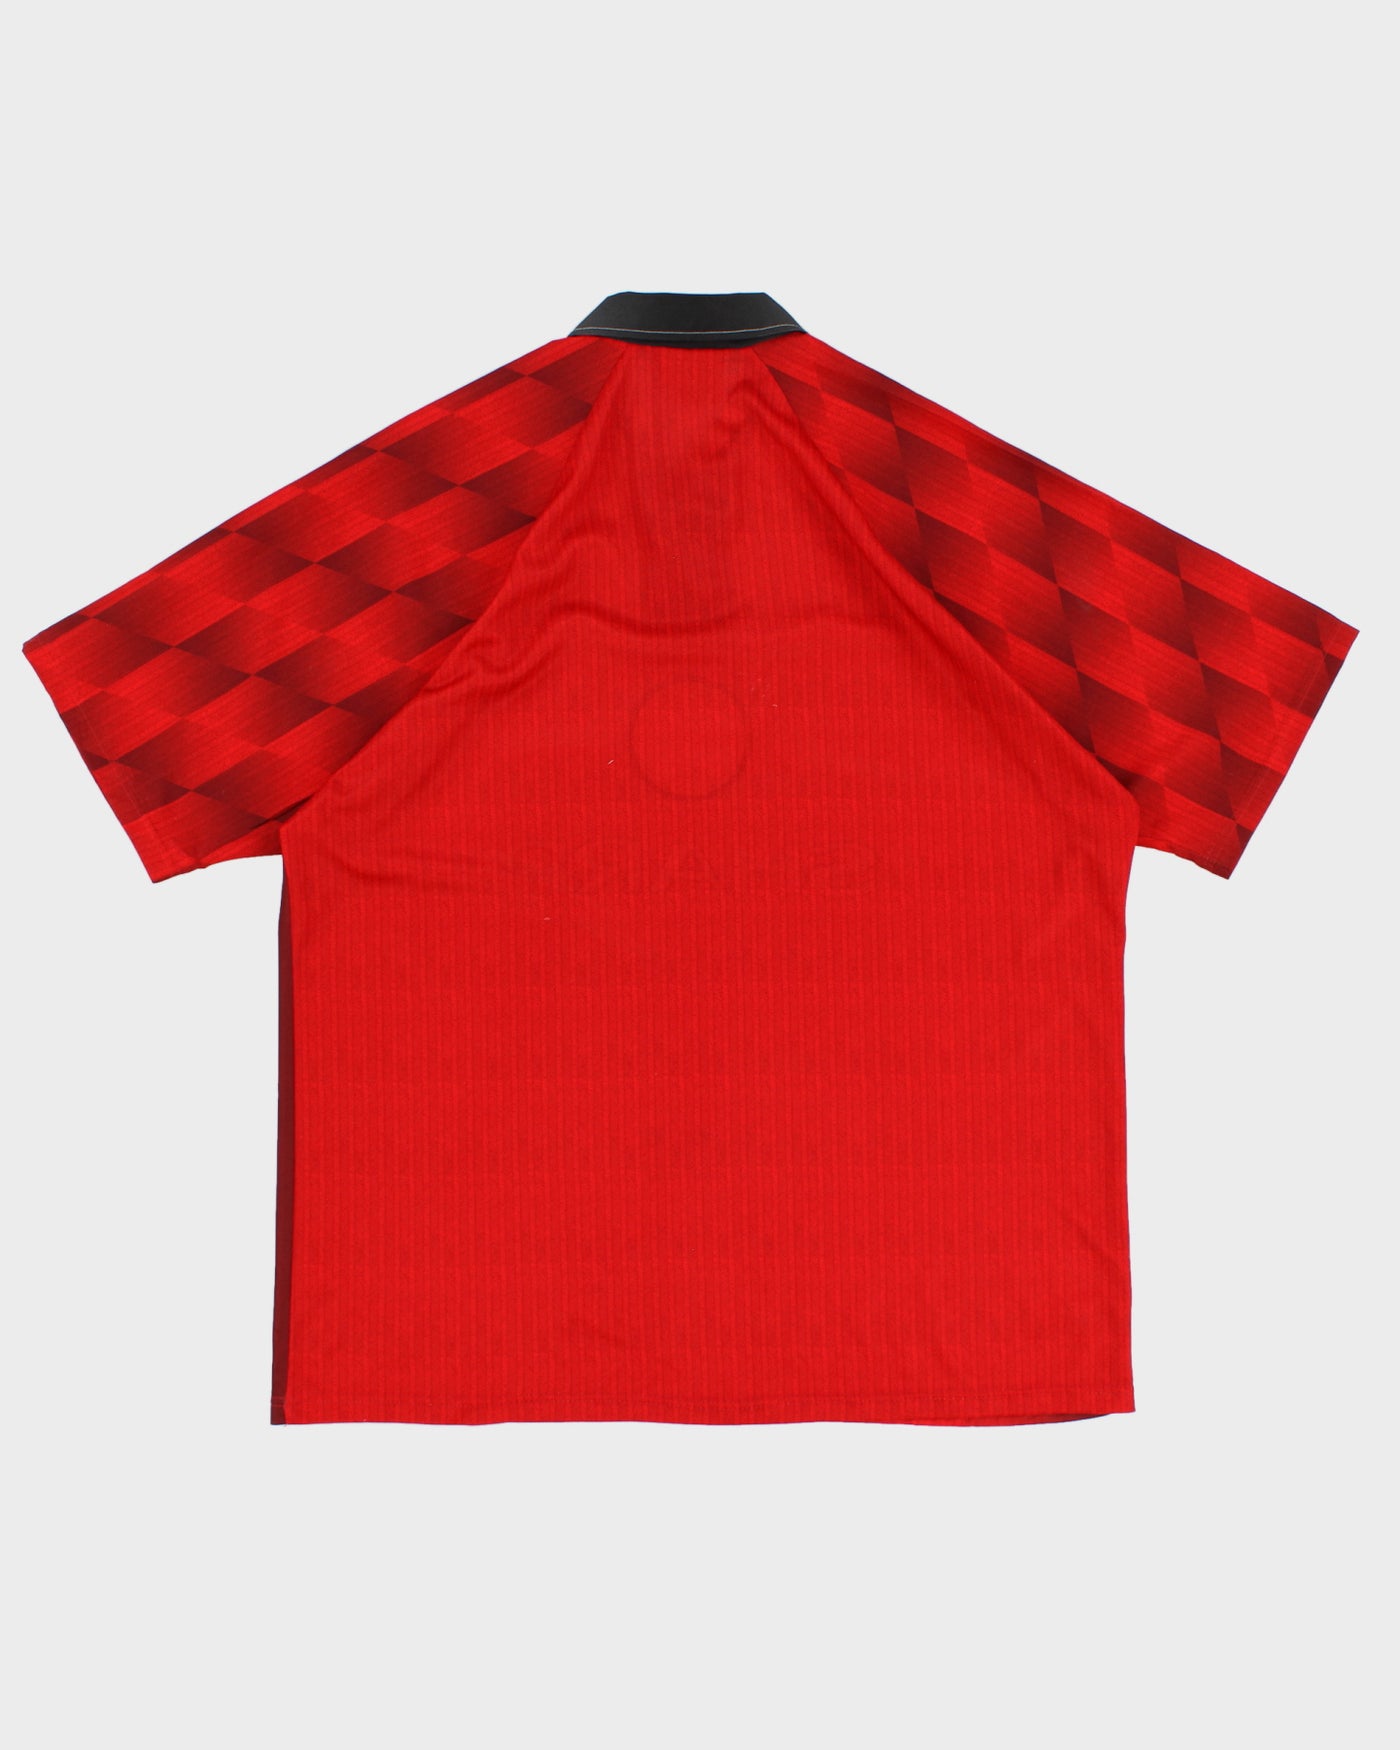 Vintage 90s Manchester United Umbro Football Shirt - XL